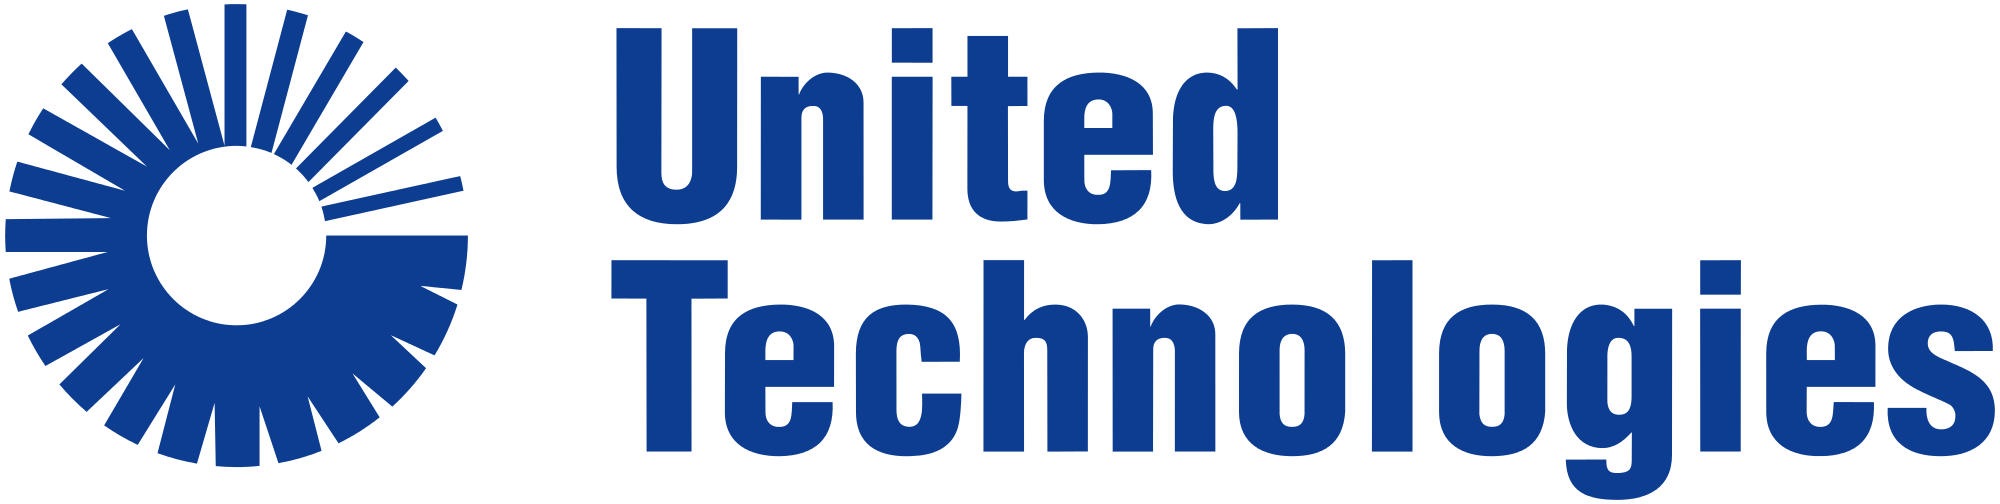 United Technologies Logo - File:United technologies logo.svg - Wikimedia Commons